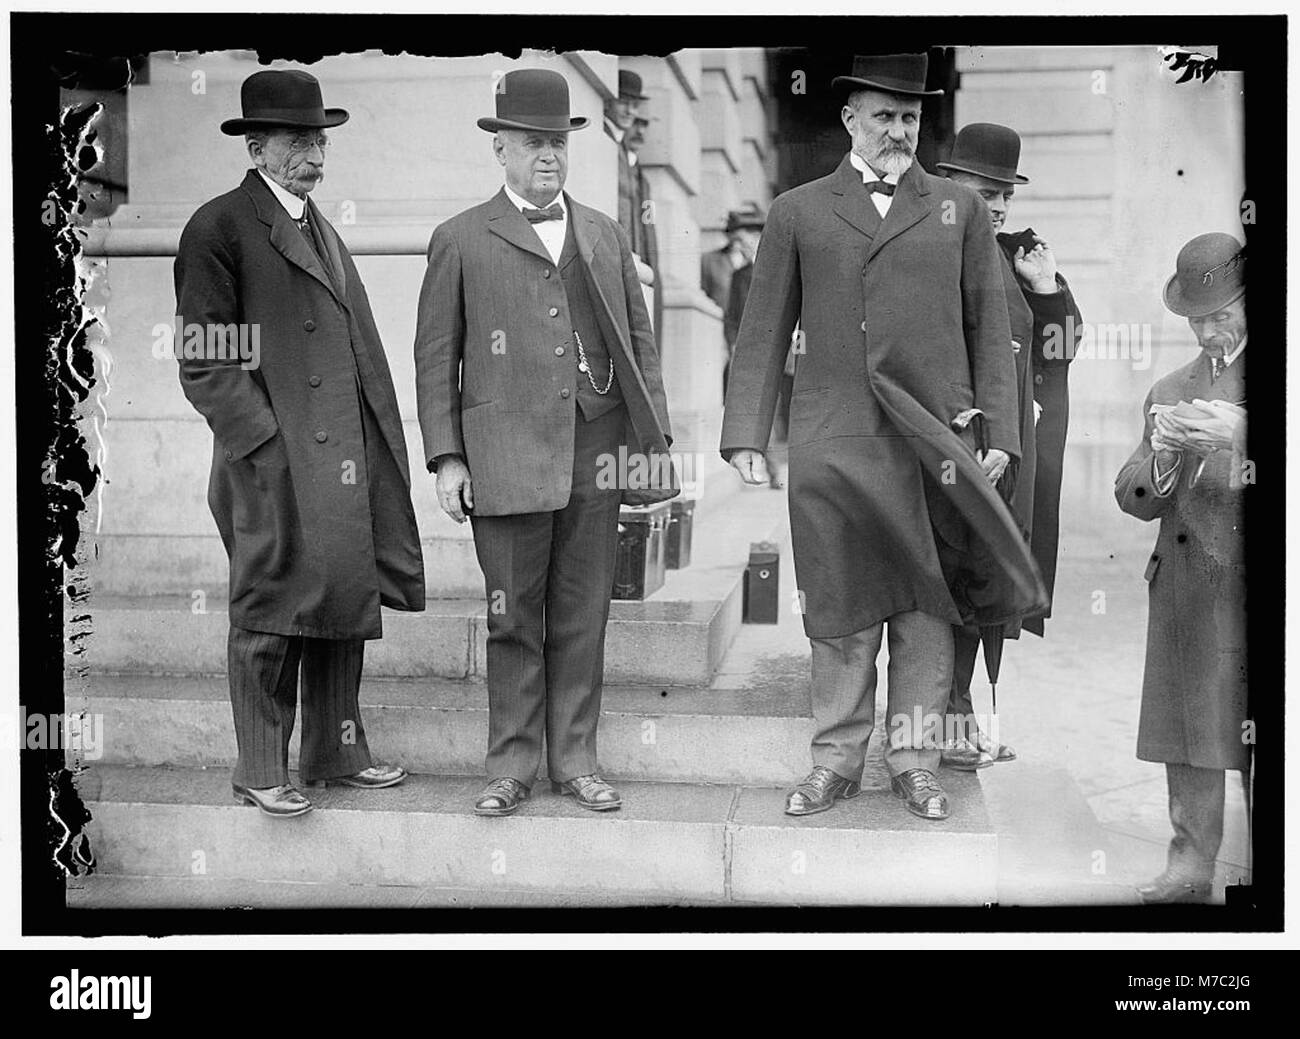 BARTLETT, CHARLES LAFAYETTE, RANSDELL, JOSEPH EUGENE REP. FROM LOUISIANA, 1899-1913; SENATOR, 1913-1931. AS SENATOR ELECT; SPARKMAN LCCN2016864114 Stock Photo